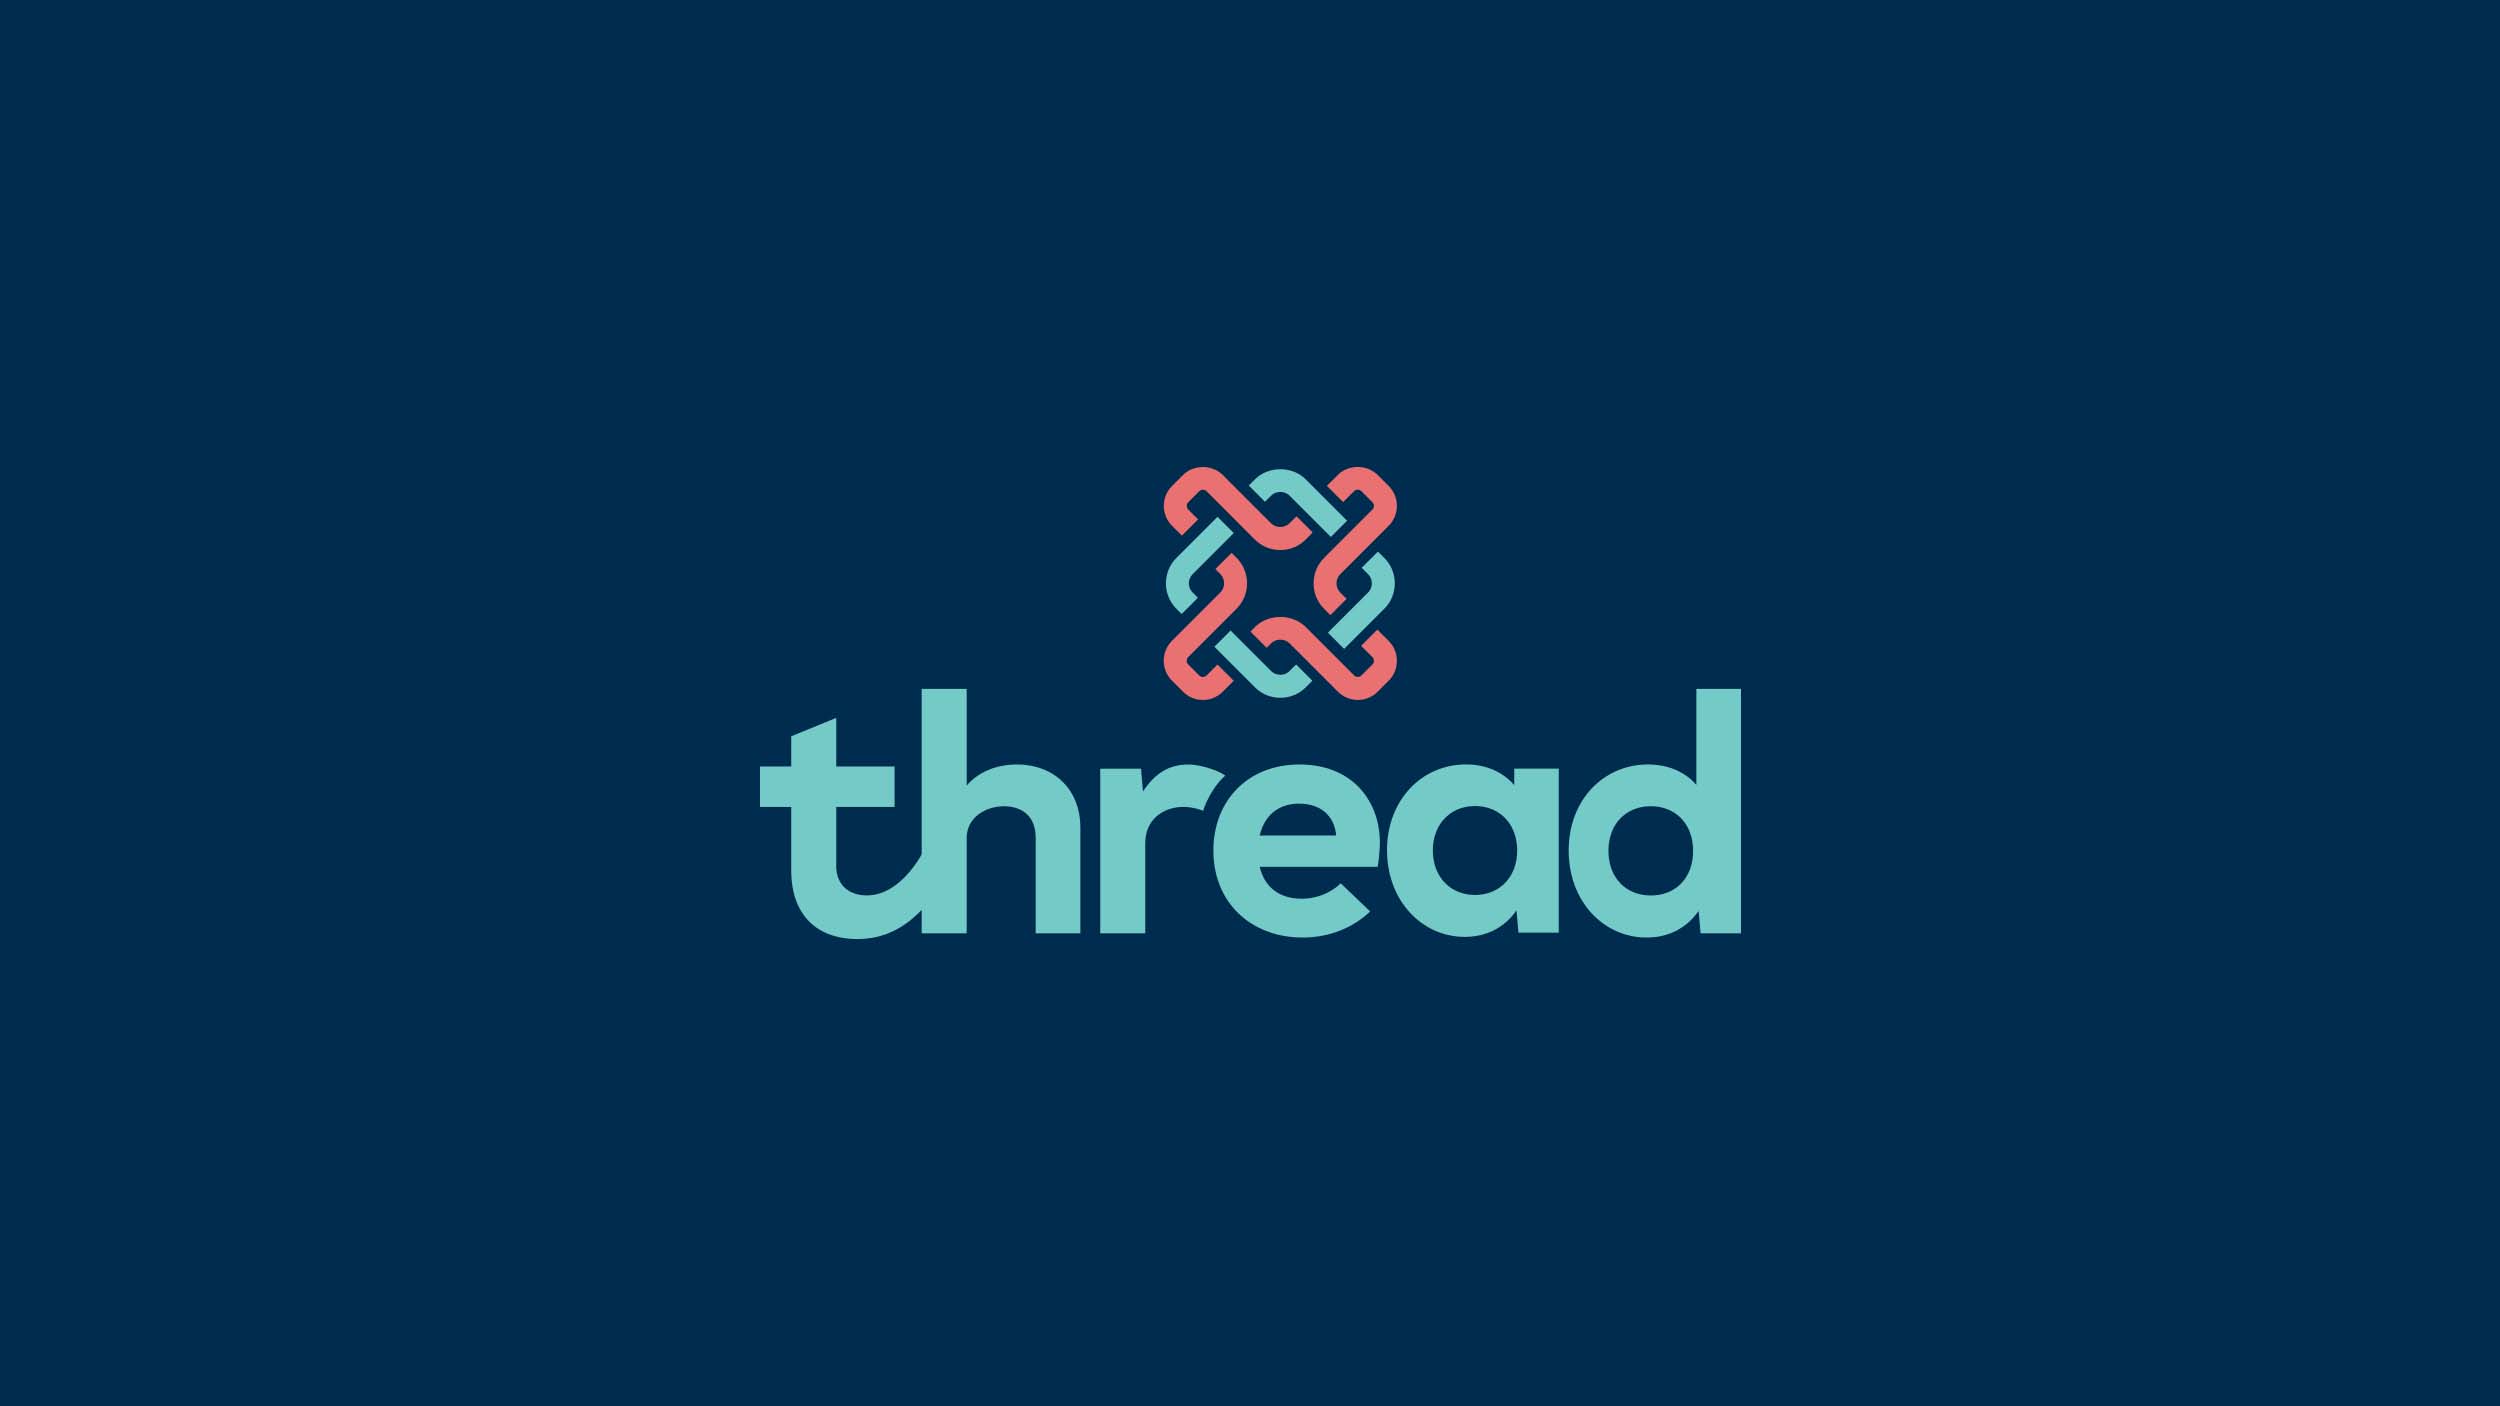 Thread logo on navy background